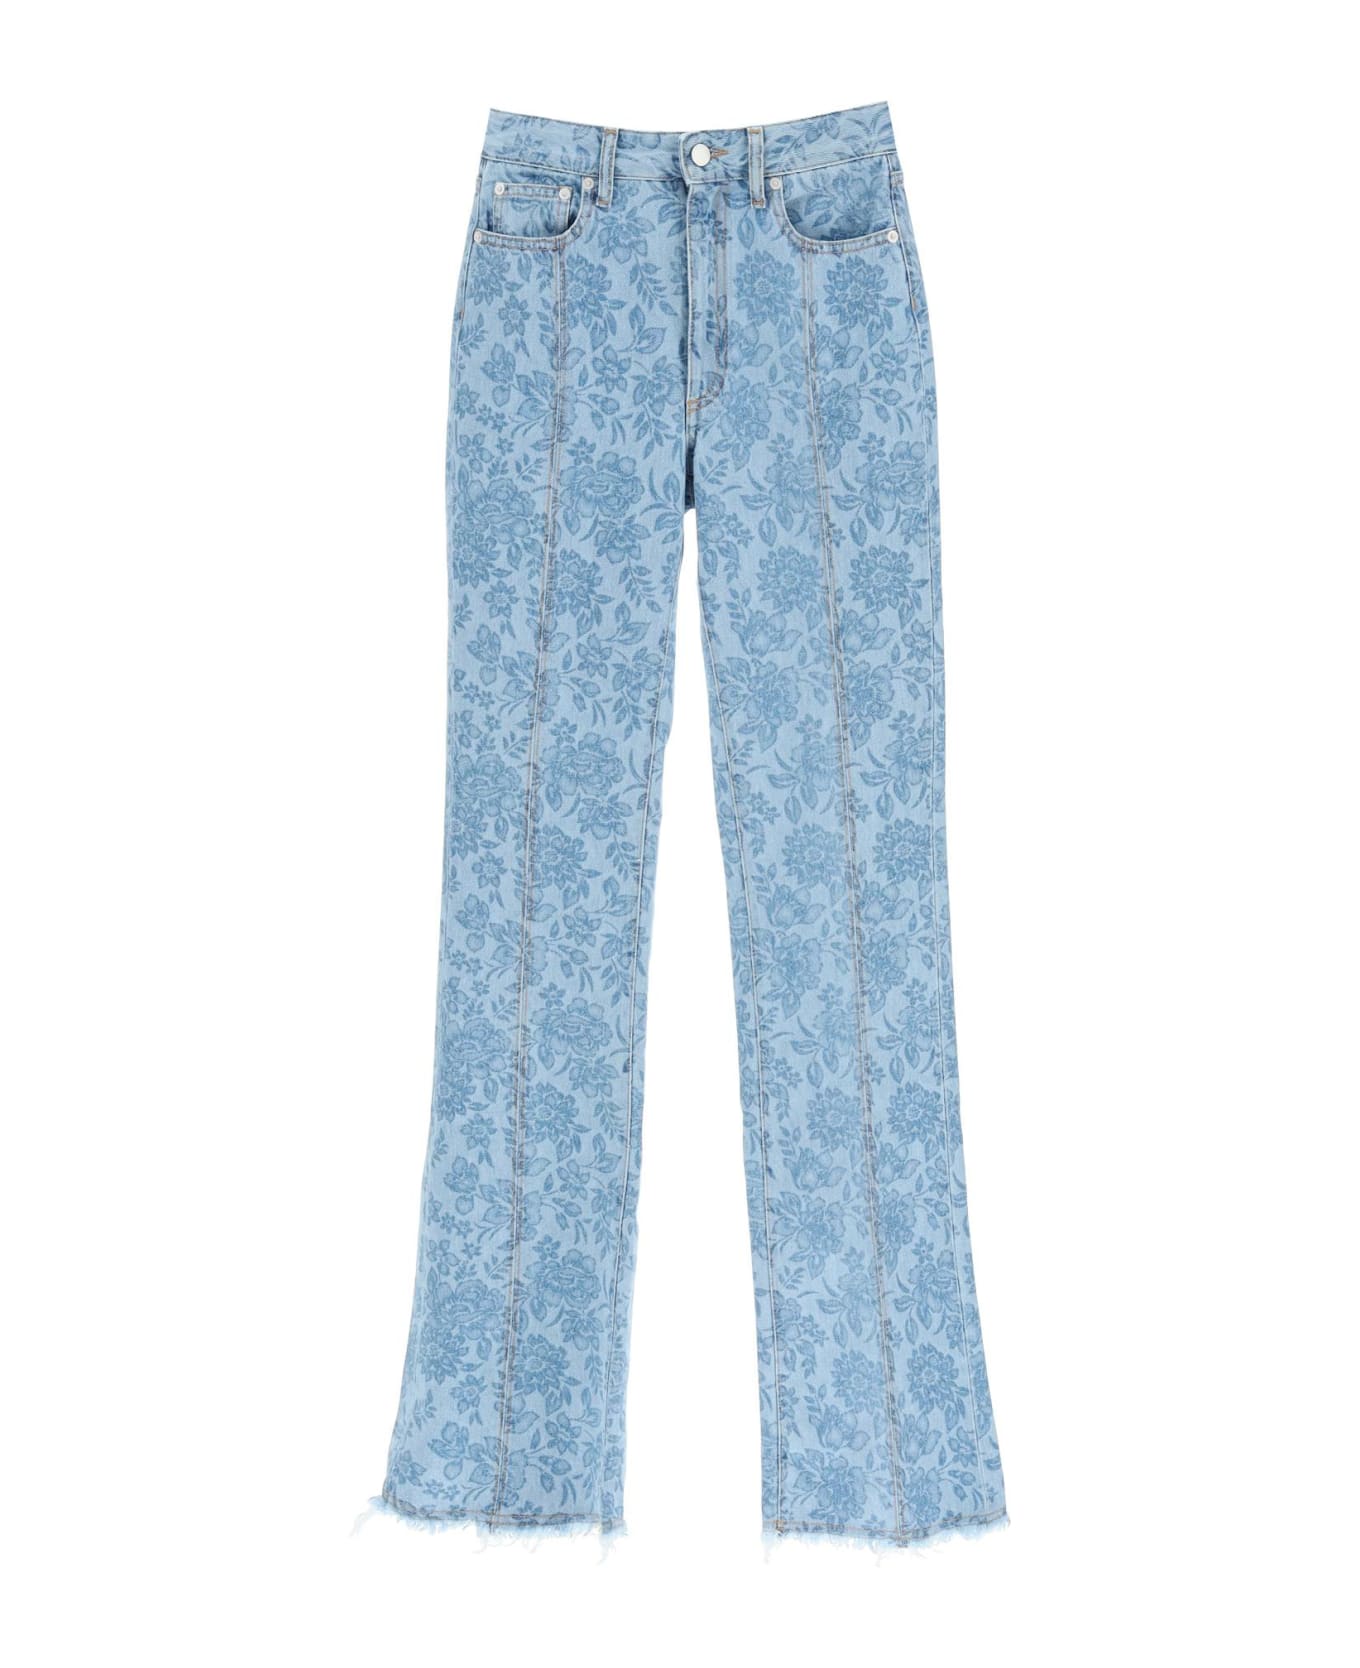 Alessandra Rich Flower Print Flared Jeans - LIGHT BLUE (Light blue)